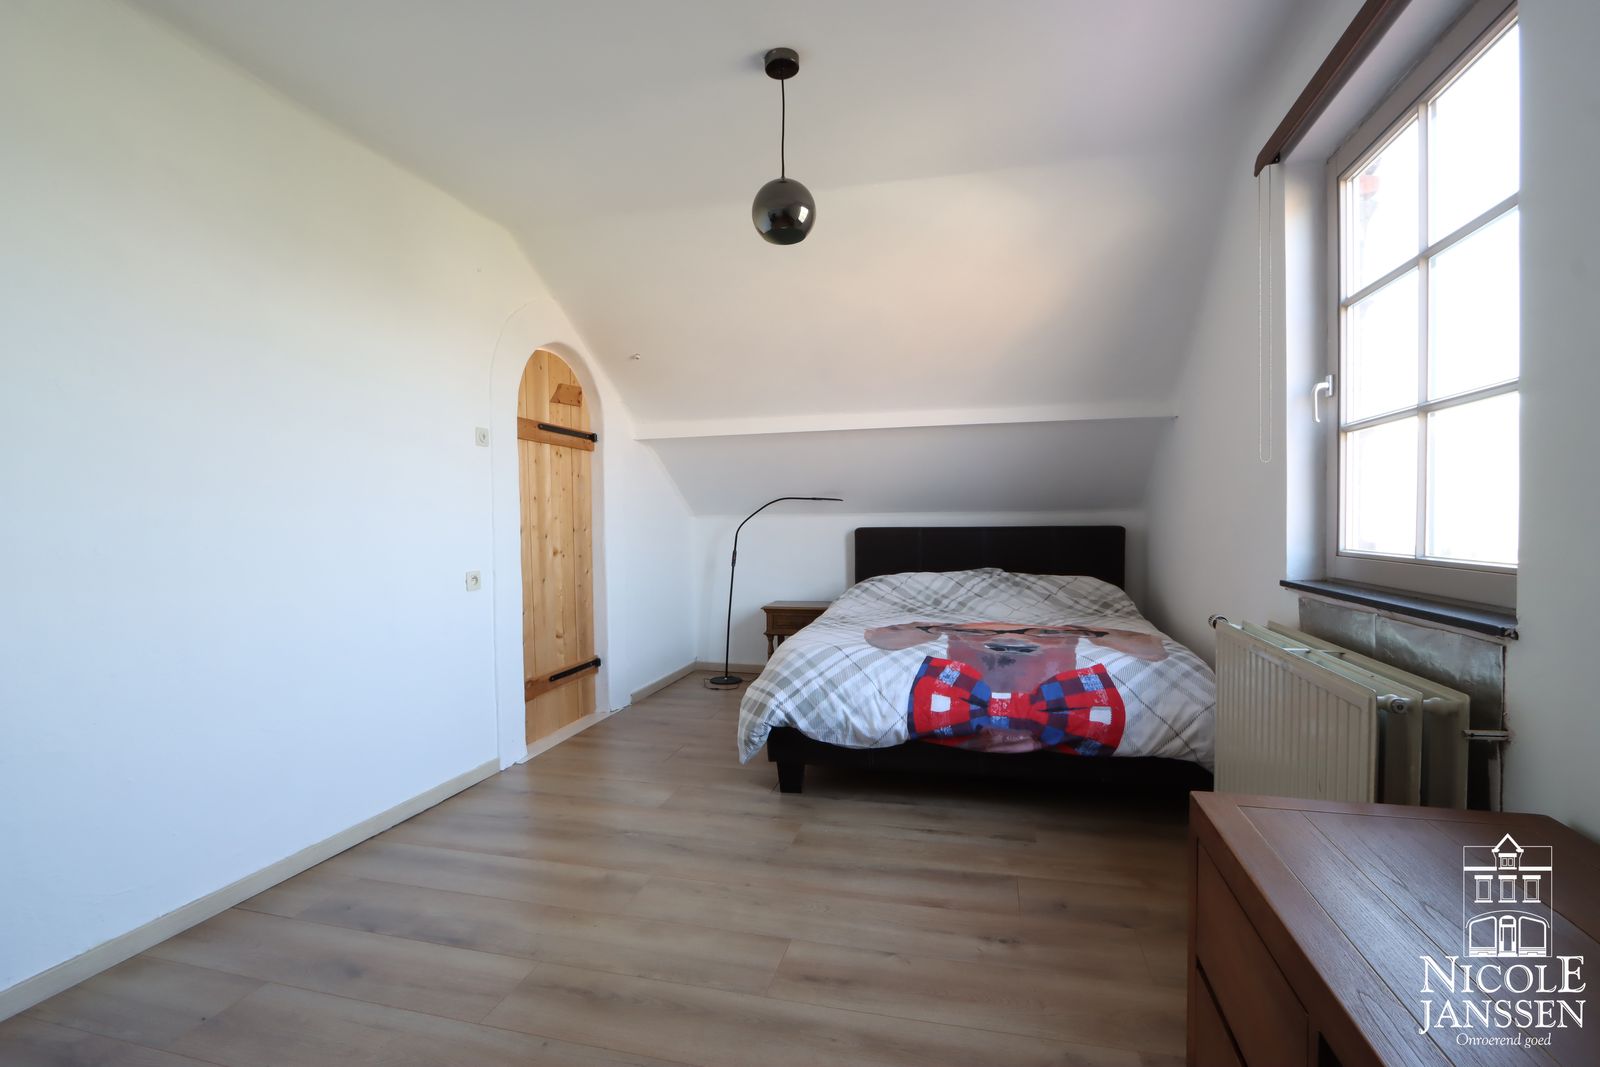 23 Nicole Janssen - huis te koop - Kantonsweg 66 te Rotem - slaapkamer.jpg